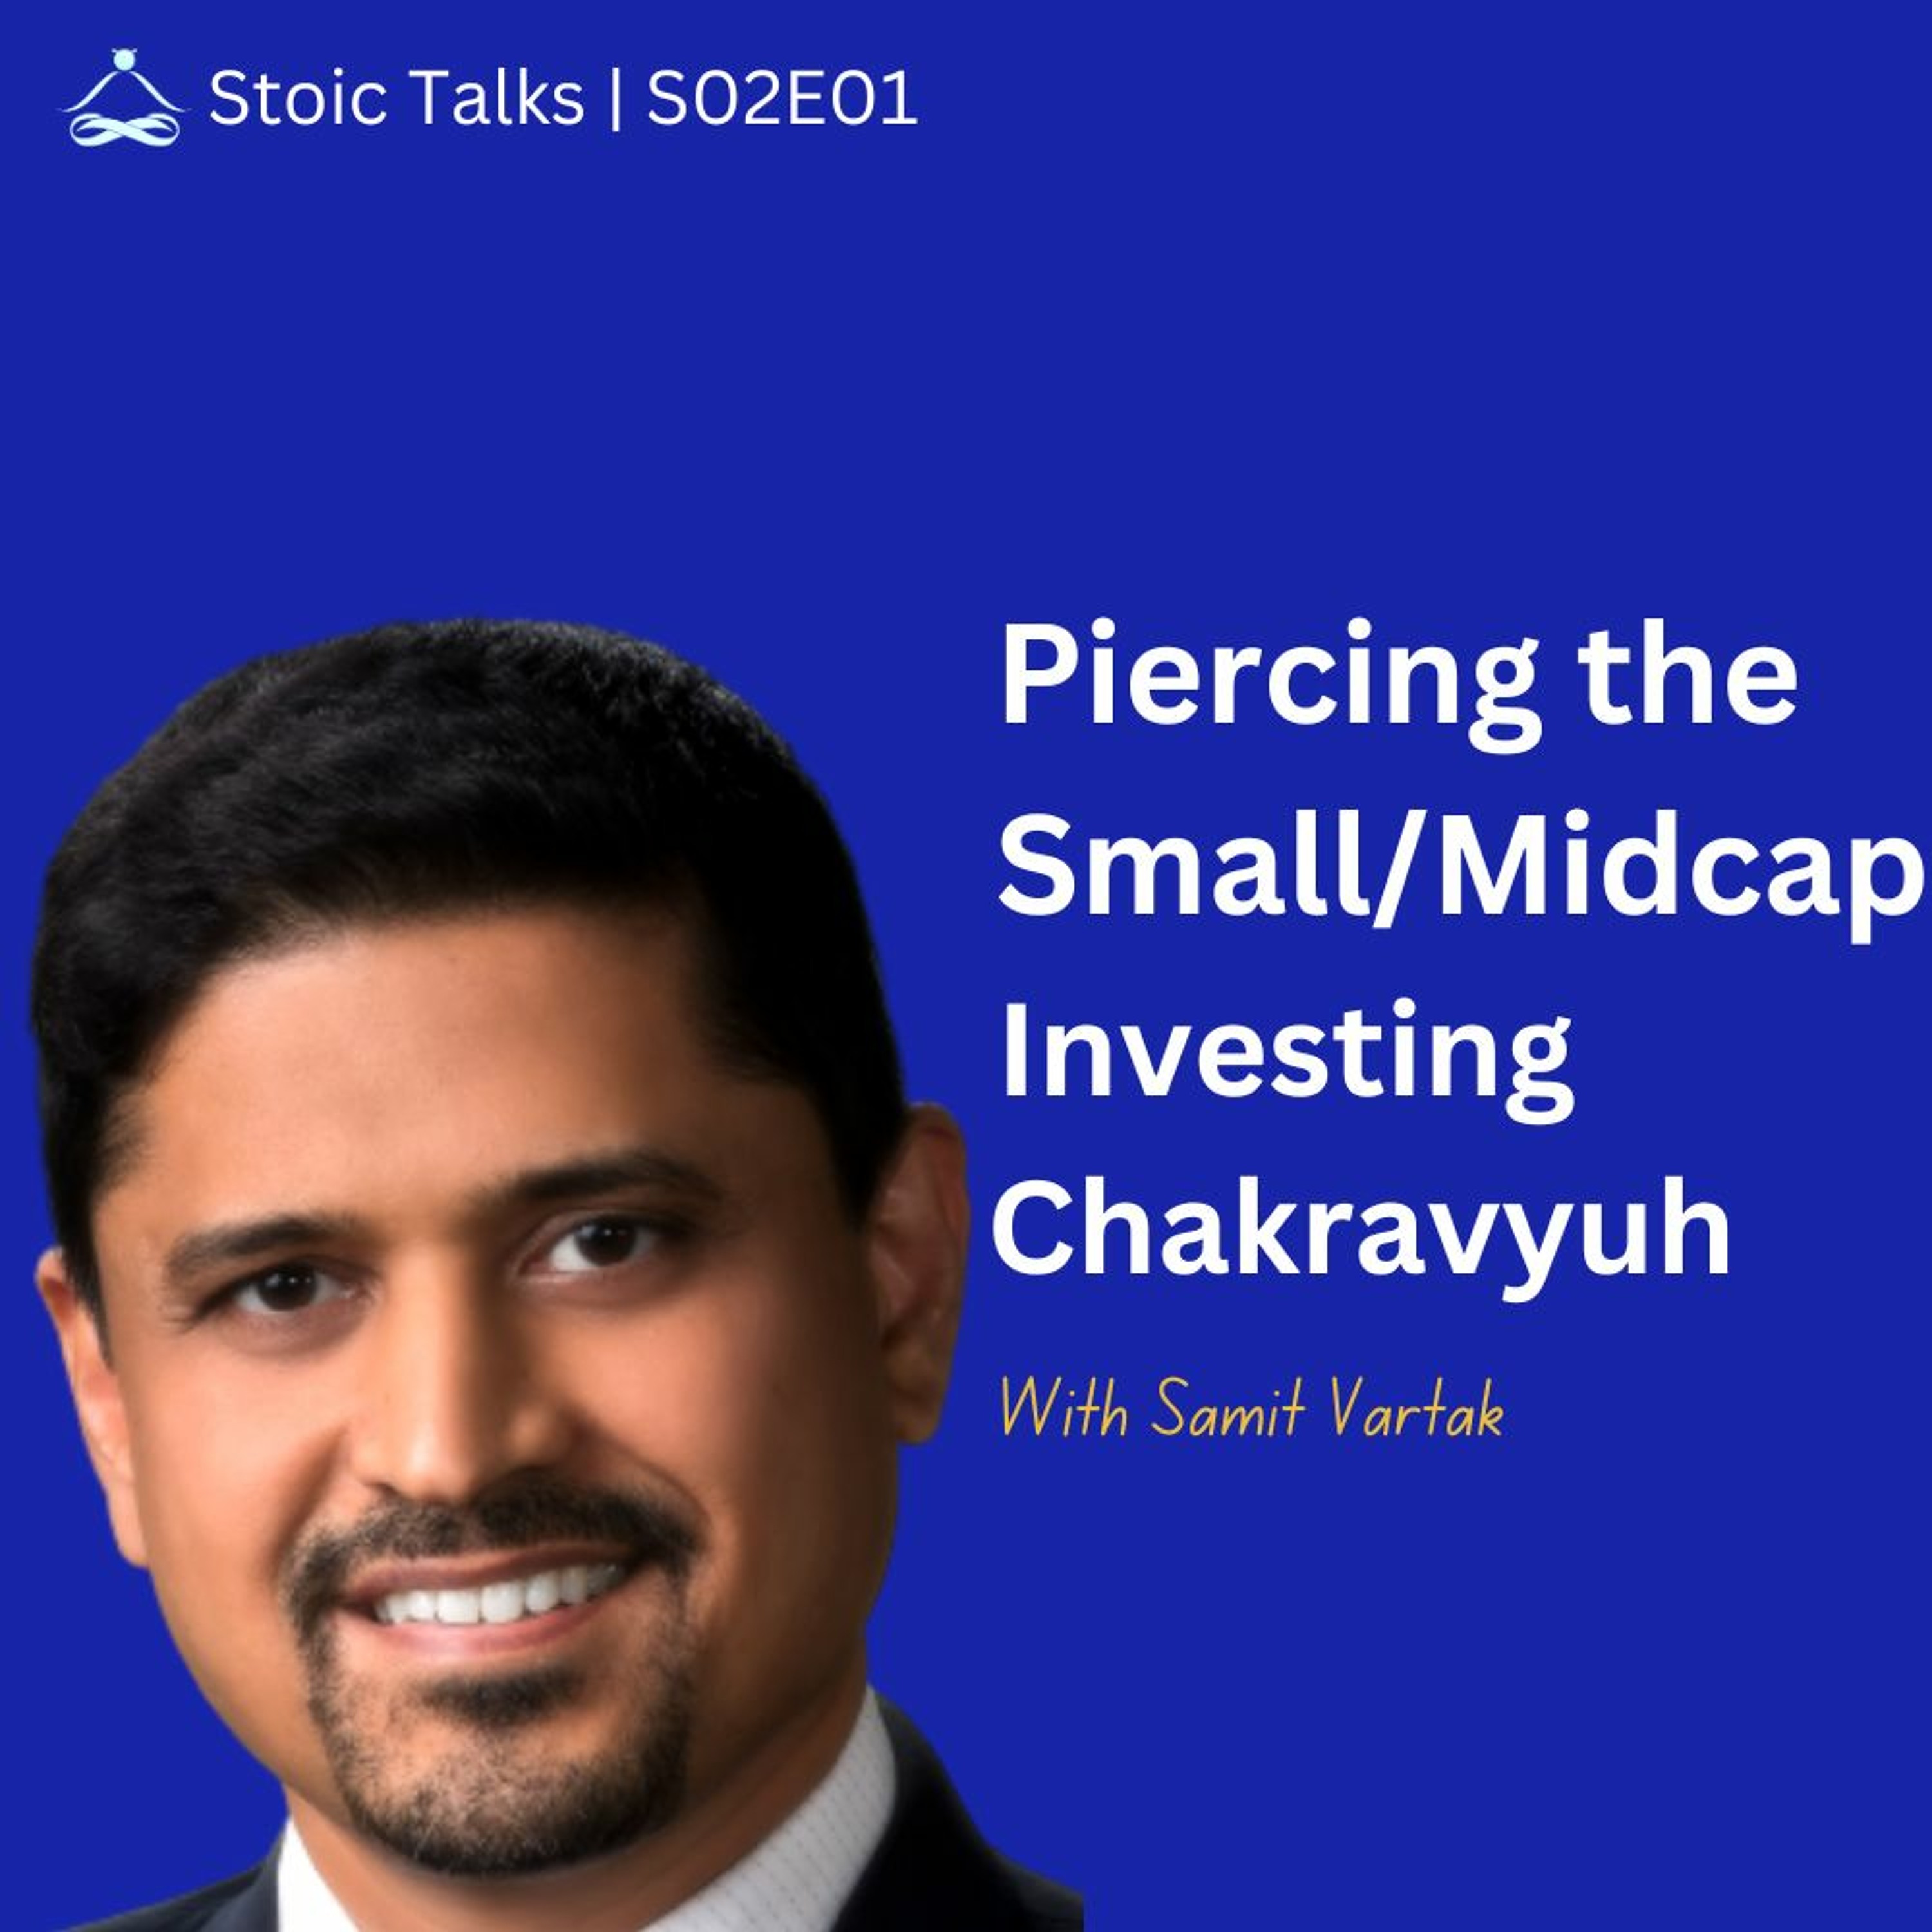 S02E01: ”Piercing the Small/Midcap Investing Chakravyuh” with Samit Vartak